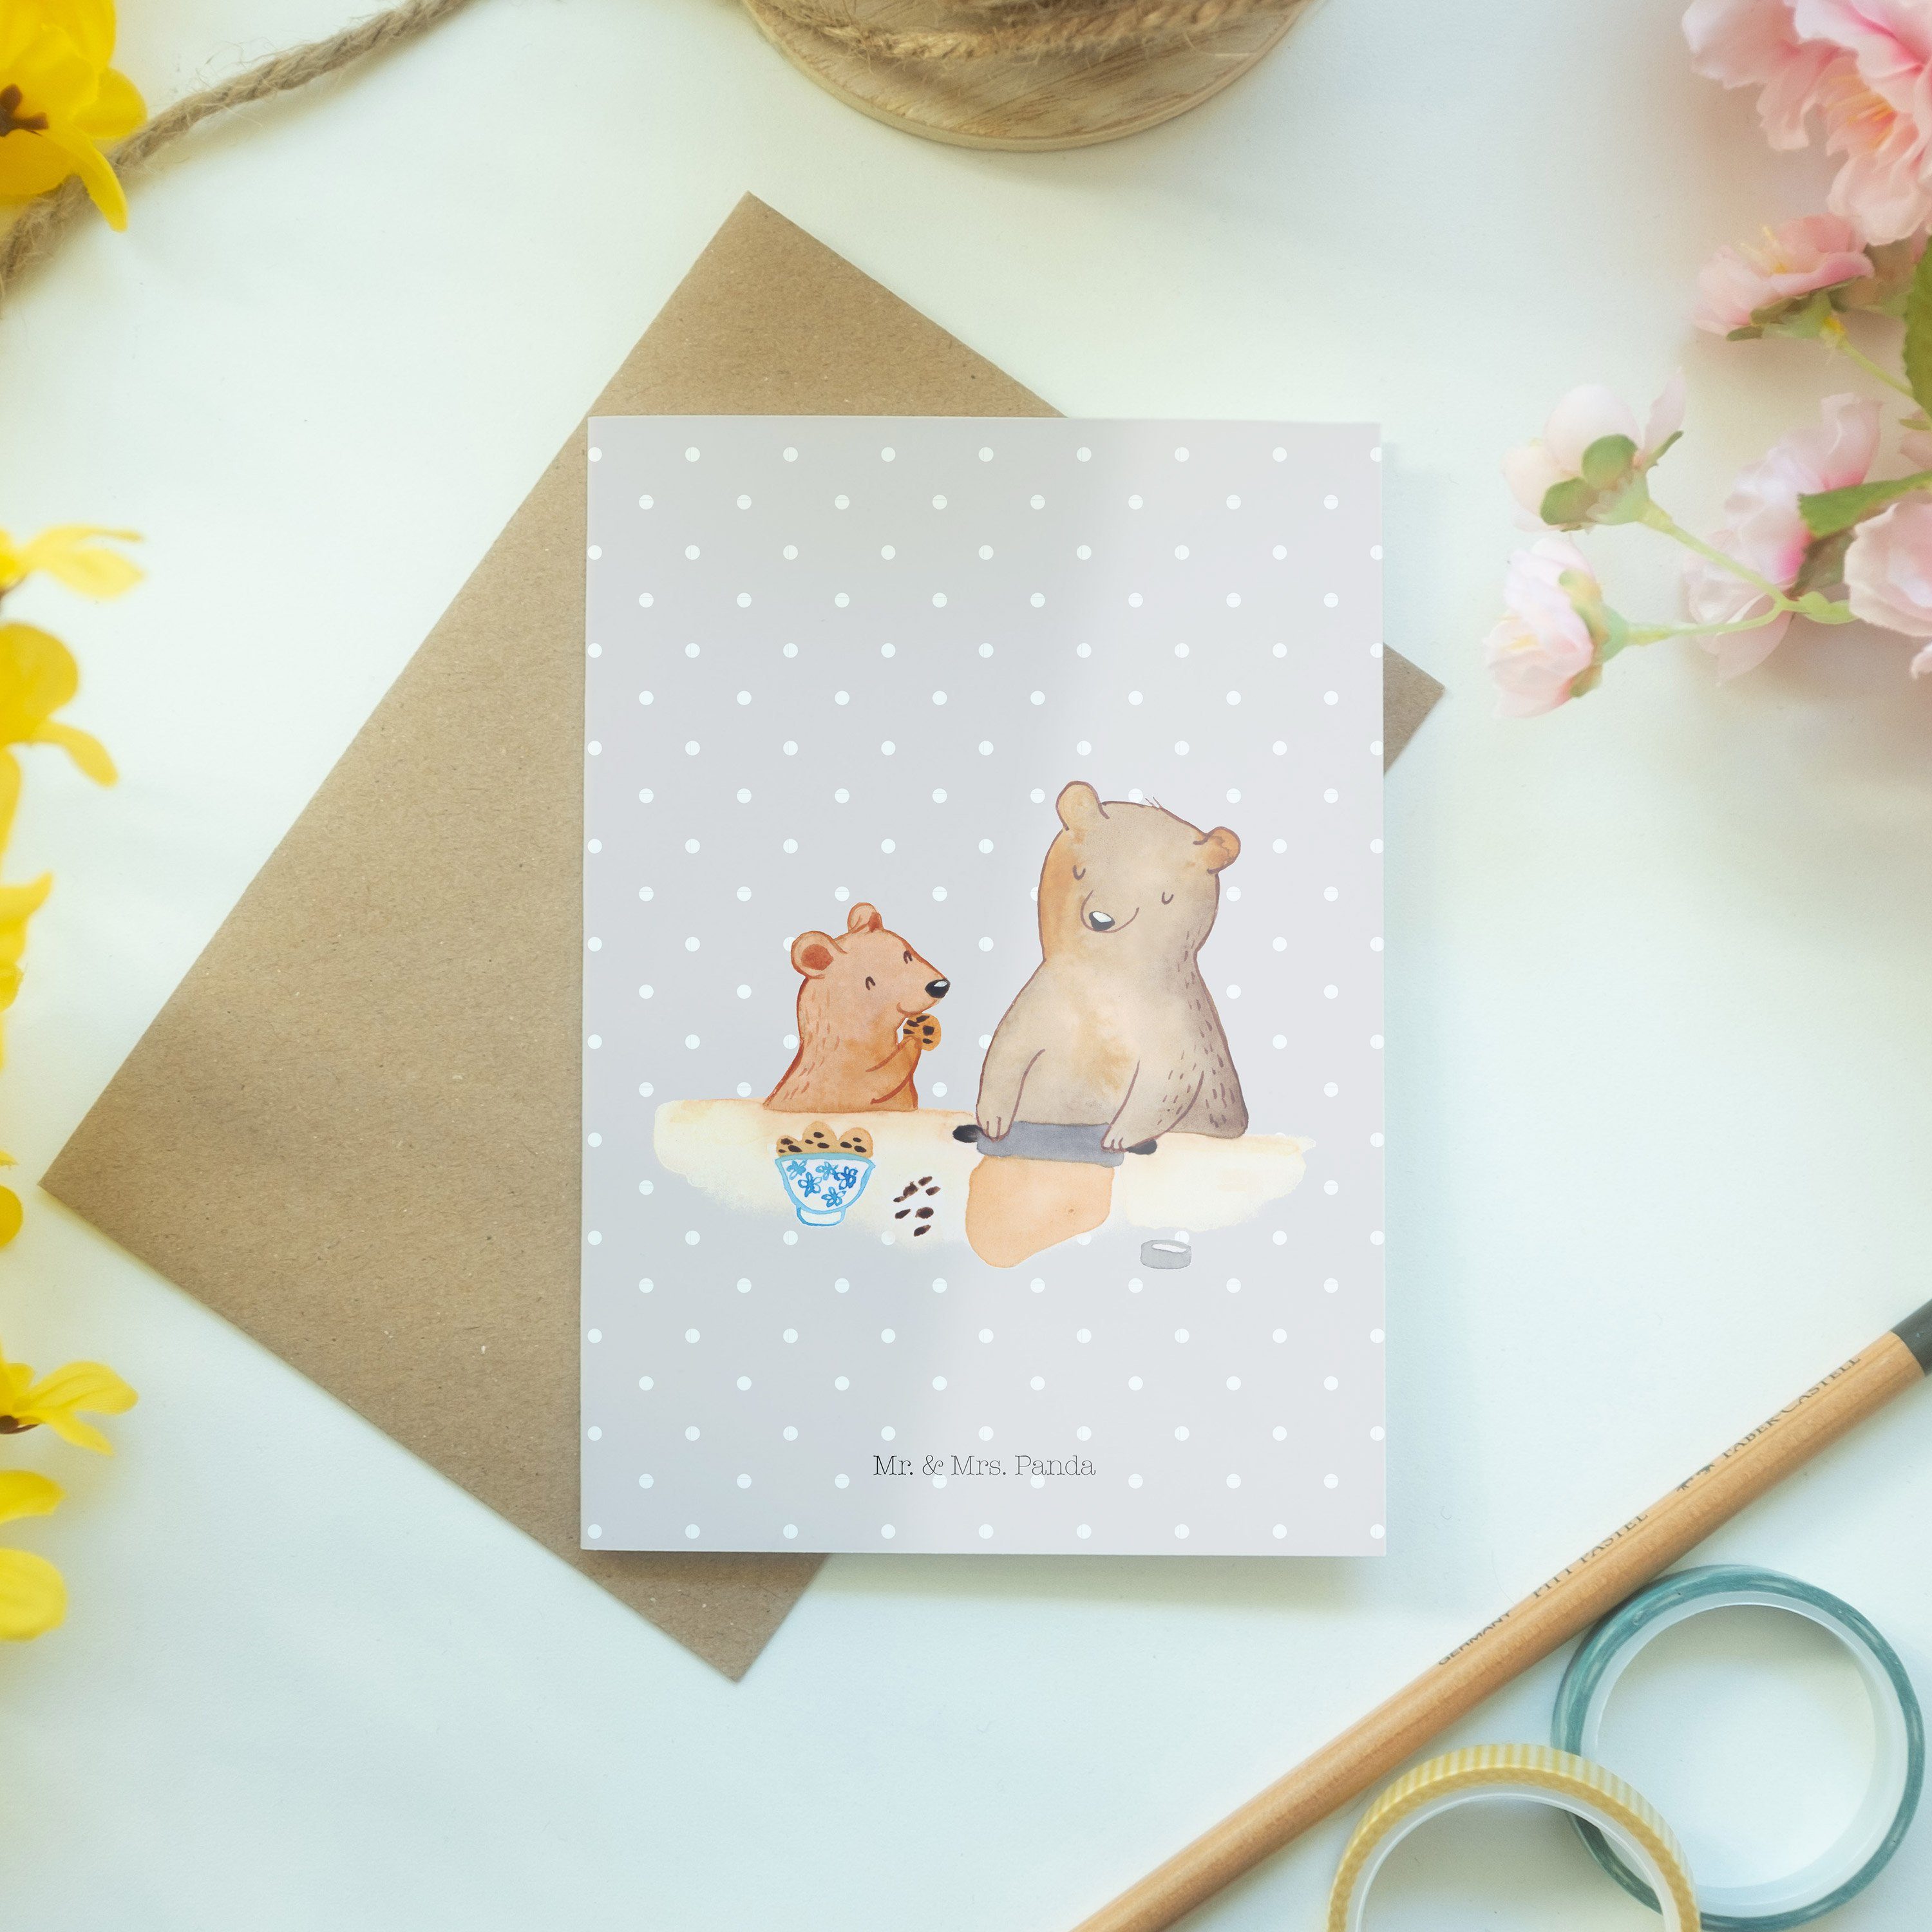 Mr. & Mrs. Panda Enkelkind, Grau - - Bär Grußkarte Glückwuns Karte, Pastell Geschenk, backen Oma